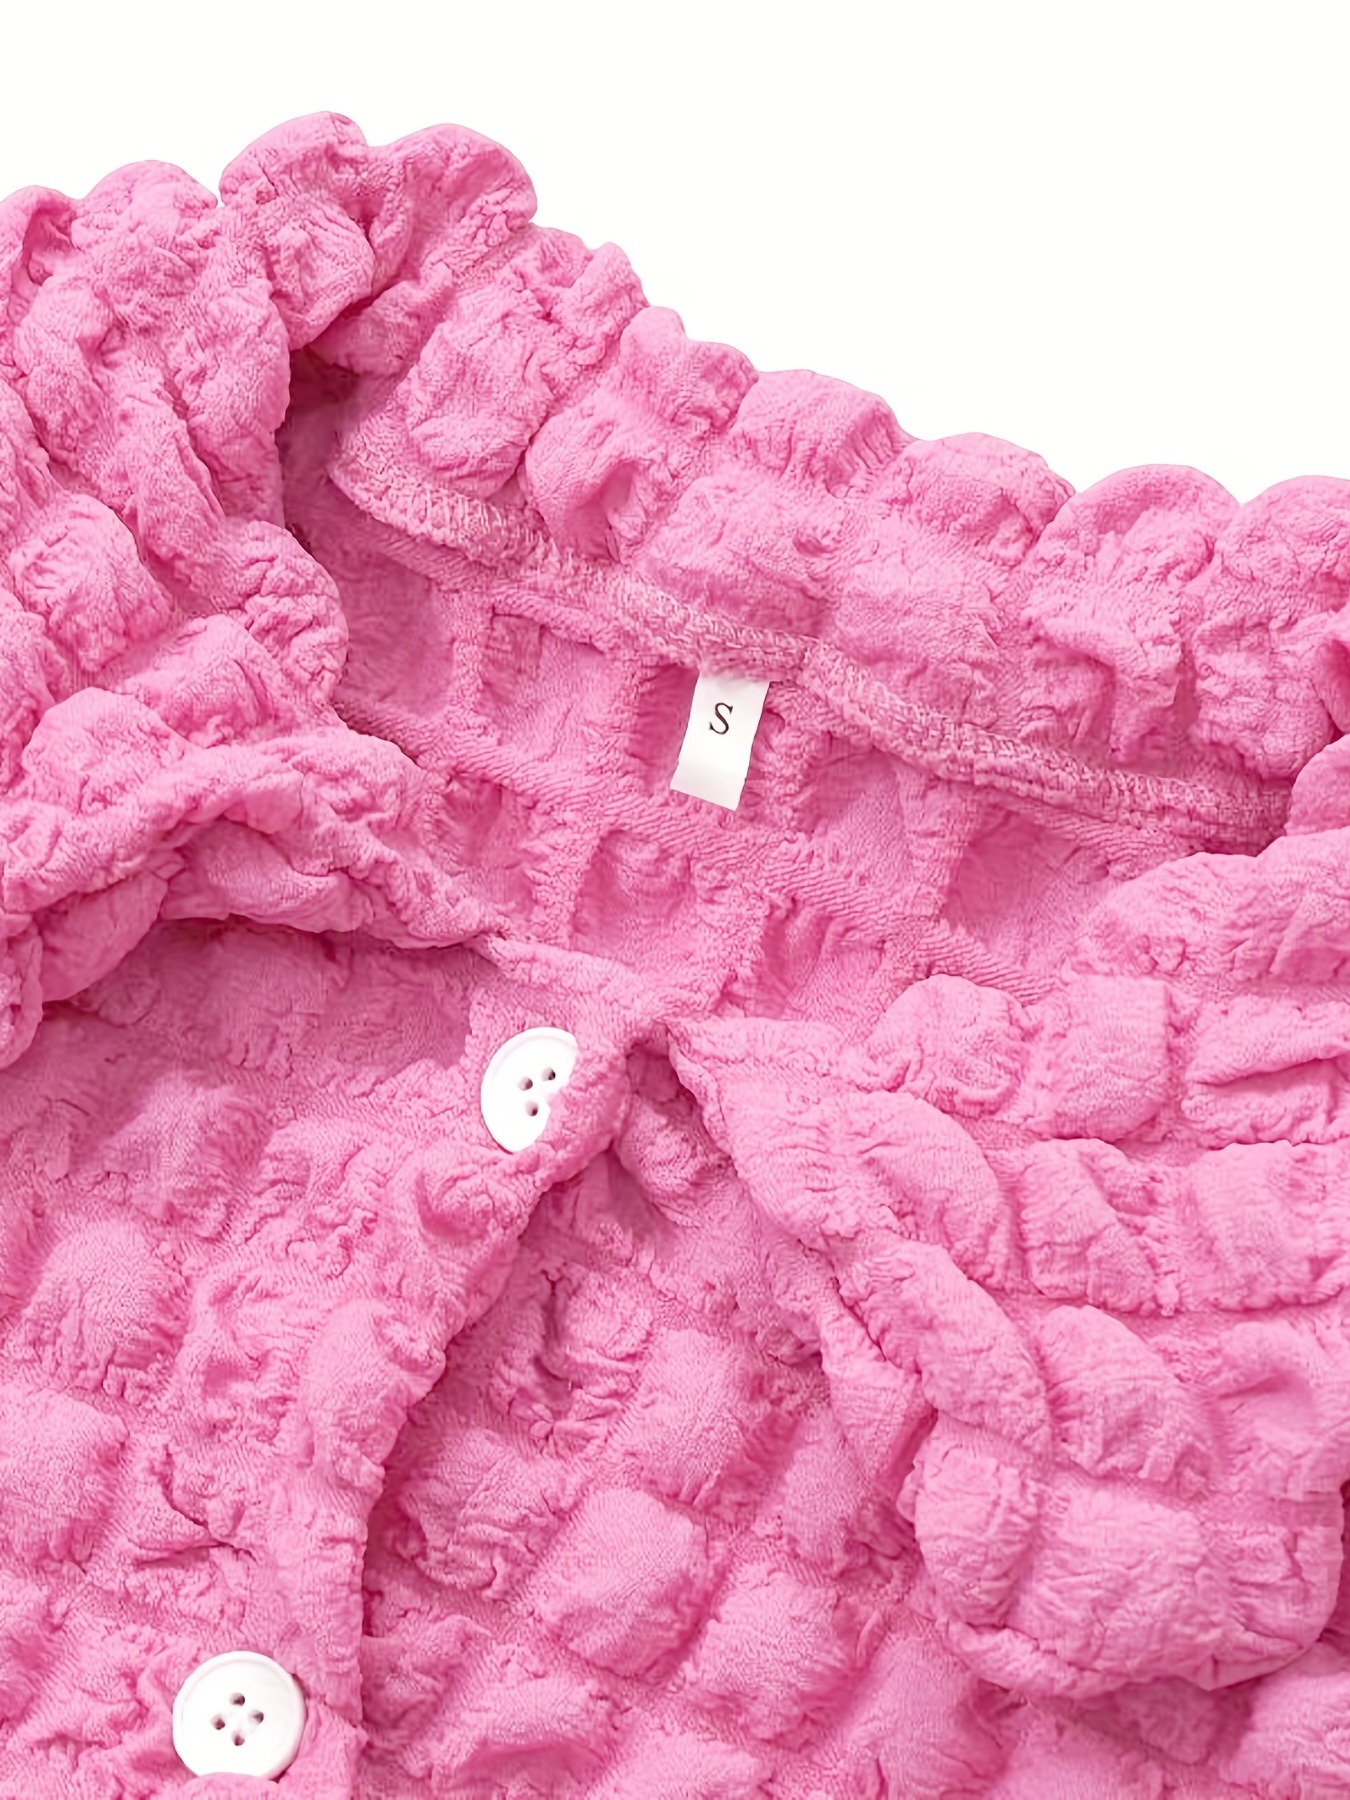 Hot Pink Ruffle Button Leggings – Little Fashionista Boutique